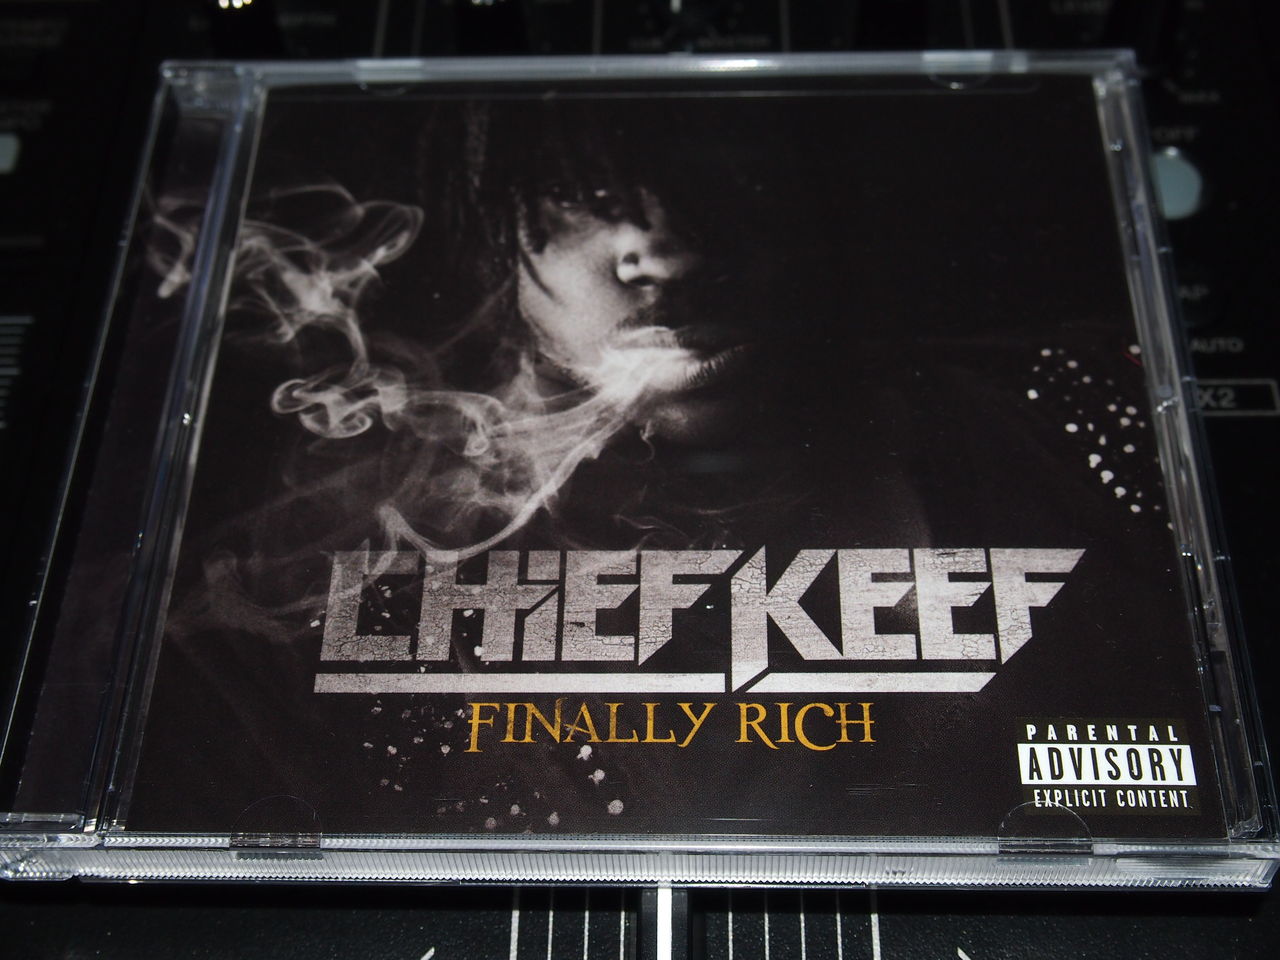 Final album. Финалли Рич. Альбом finally Rich. Чиф Киф finally Rich. Chief Keef finally Rich.